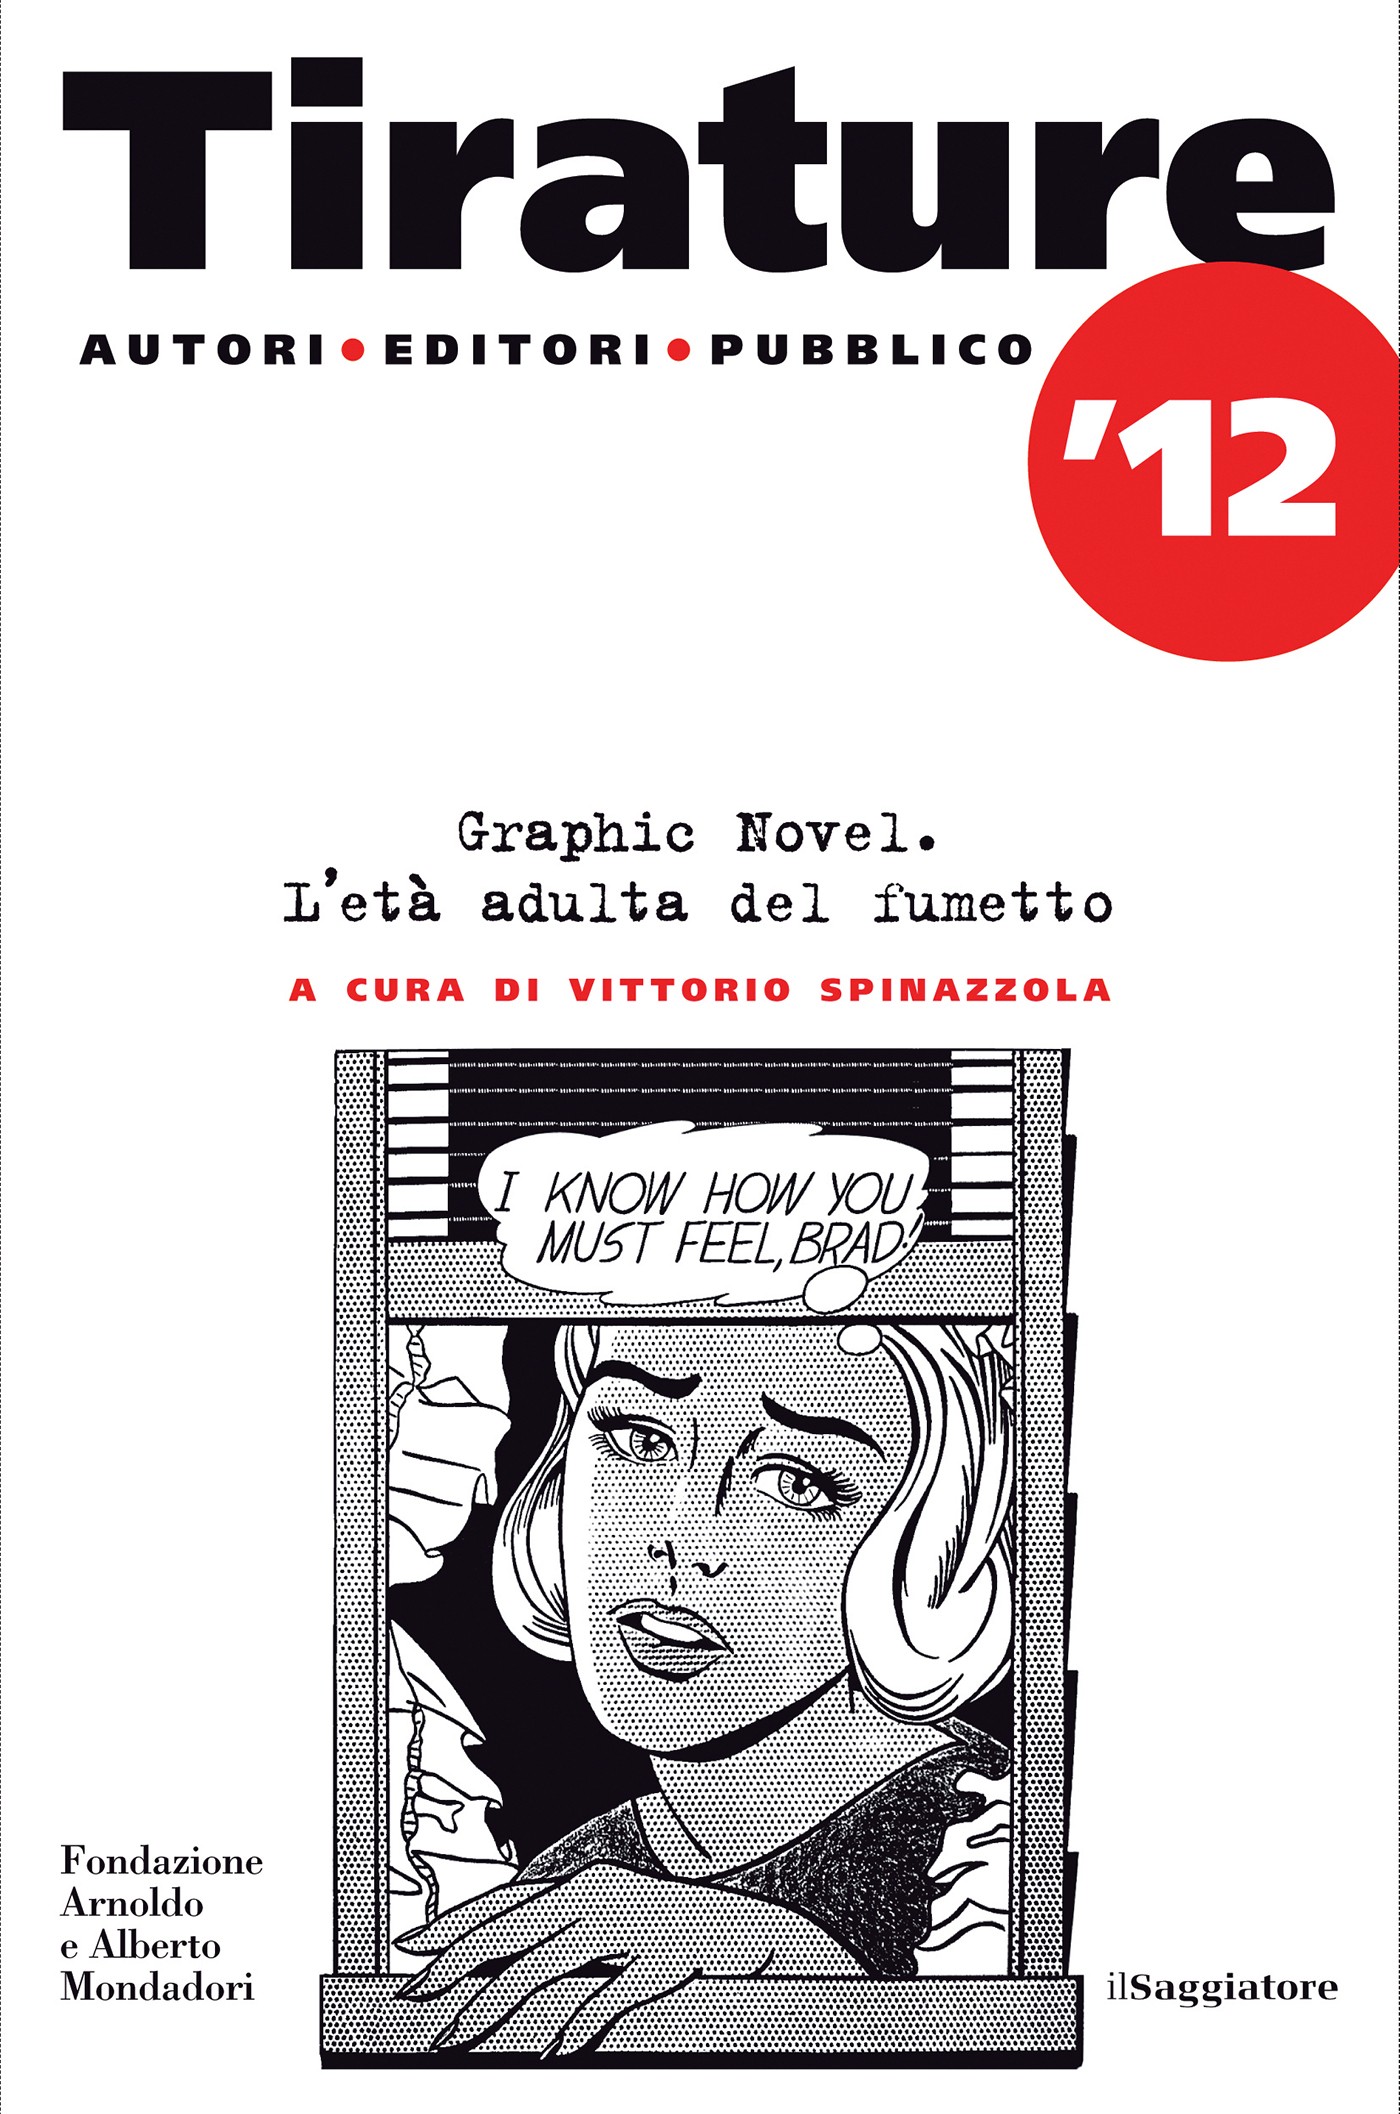 Tirature 2012. Graphic novel. L'età adulta del fumetto - Librerie.coop